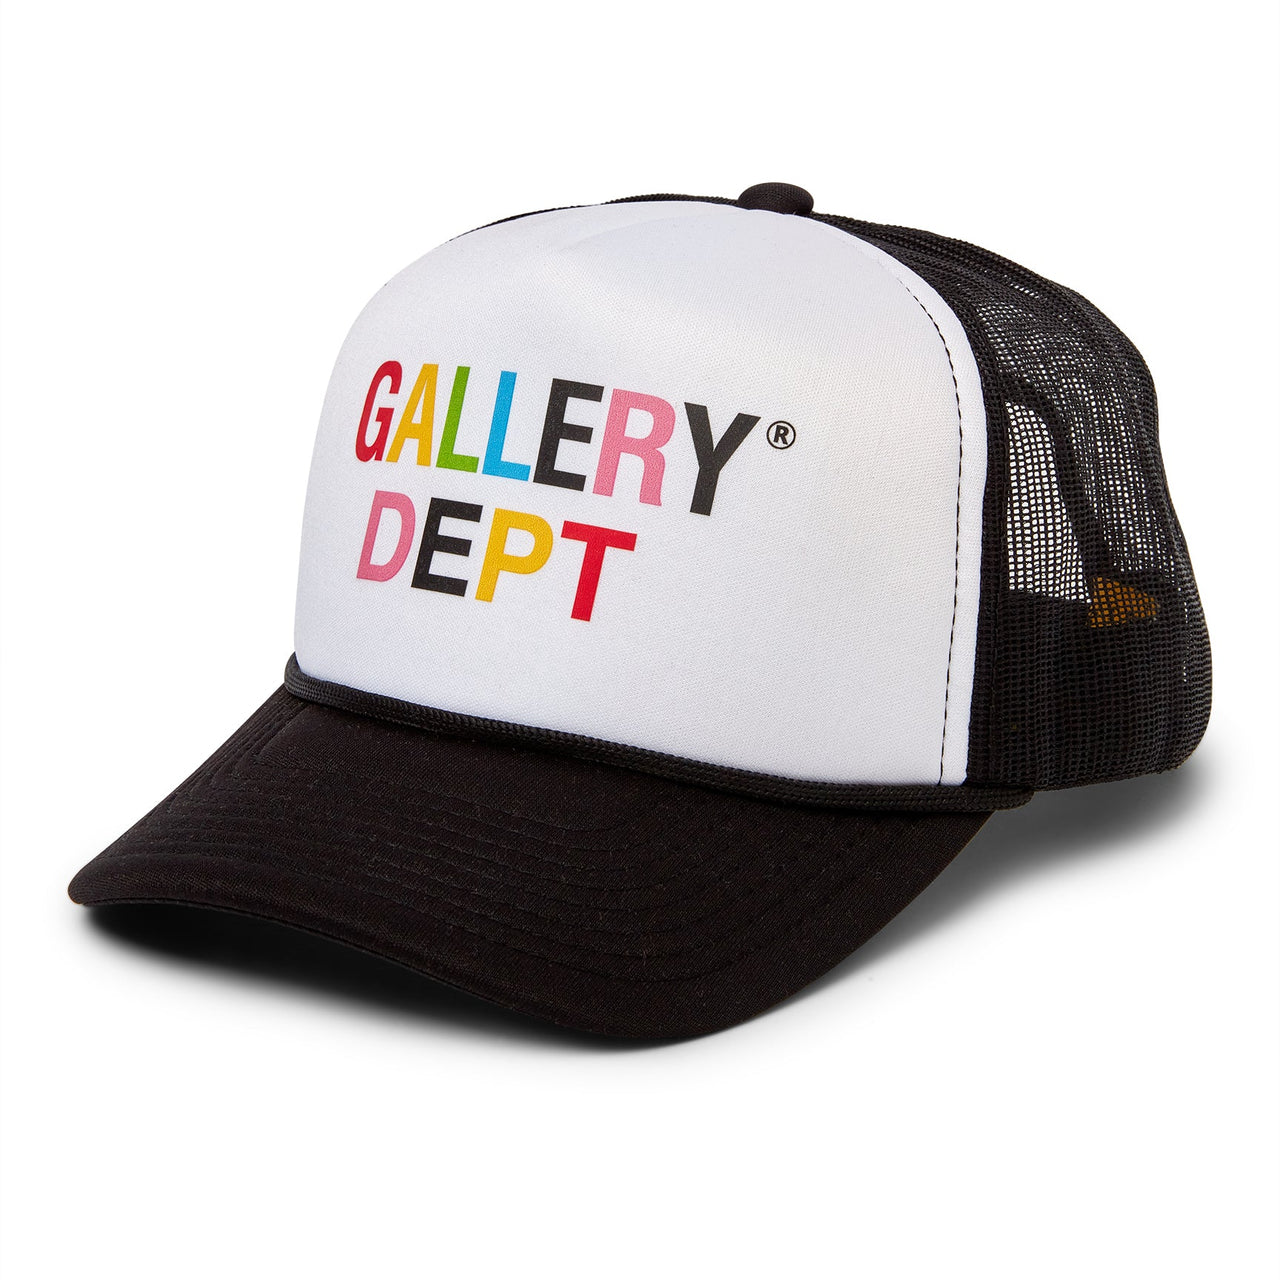 Gallery Dept. Logo Trucker Hat "Beverly Hills"